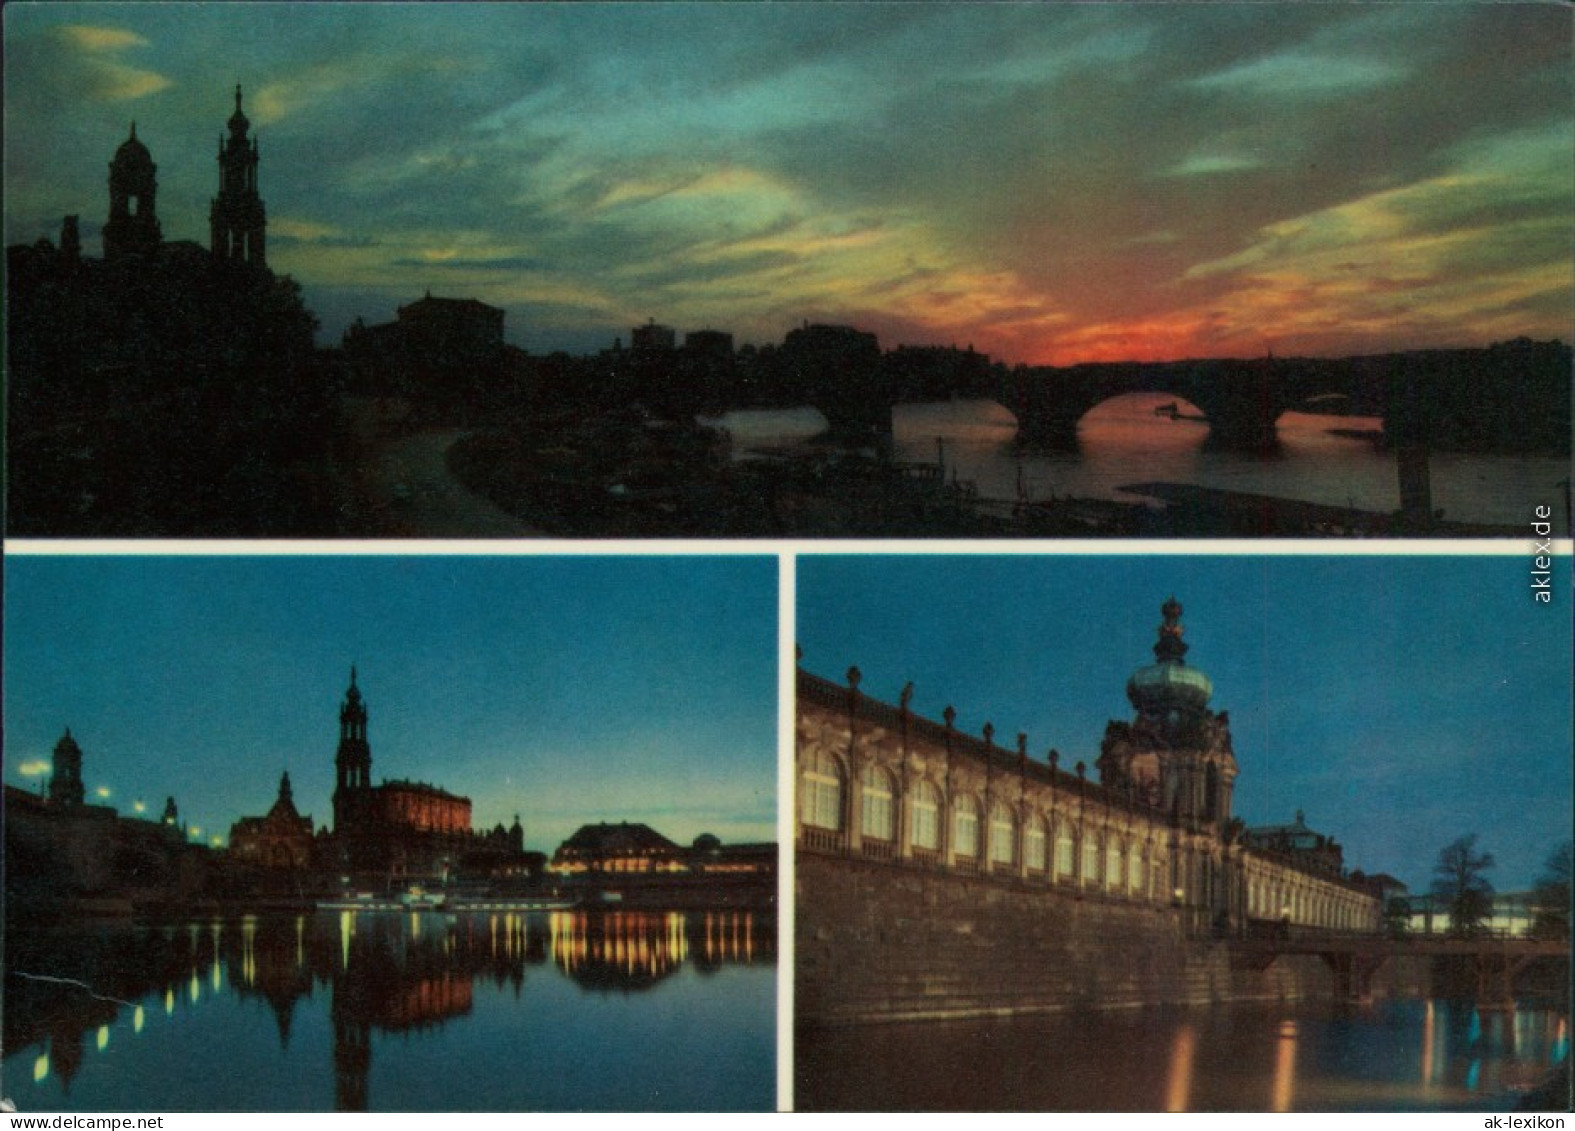 Ansichtskarte Dresden Dresden Bei Nacht 1975 - Dresden